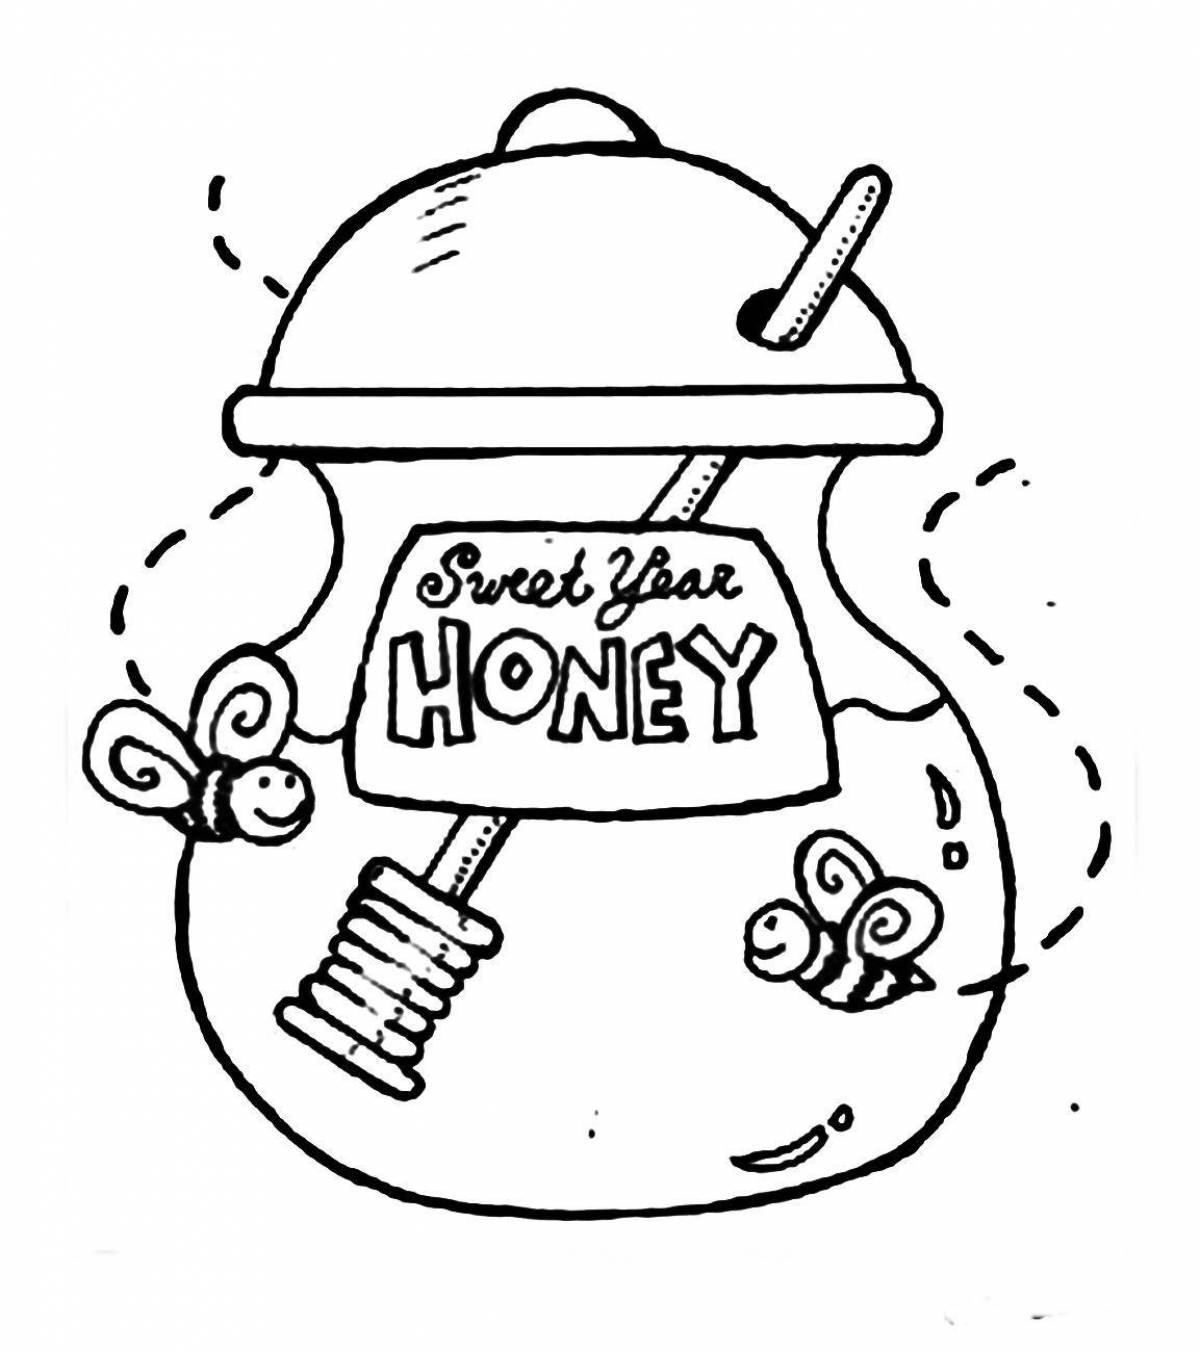 Jolly honey coloring